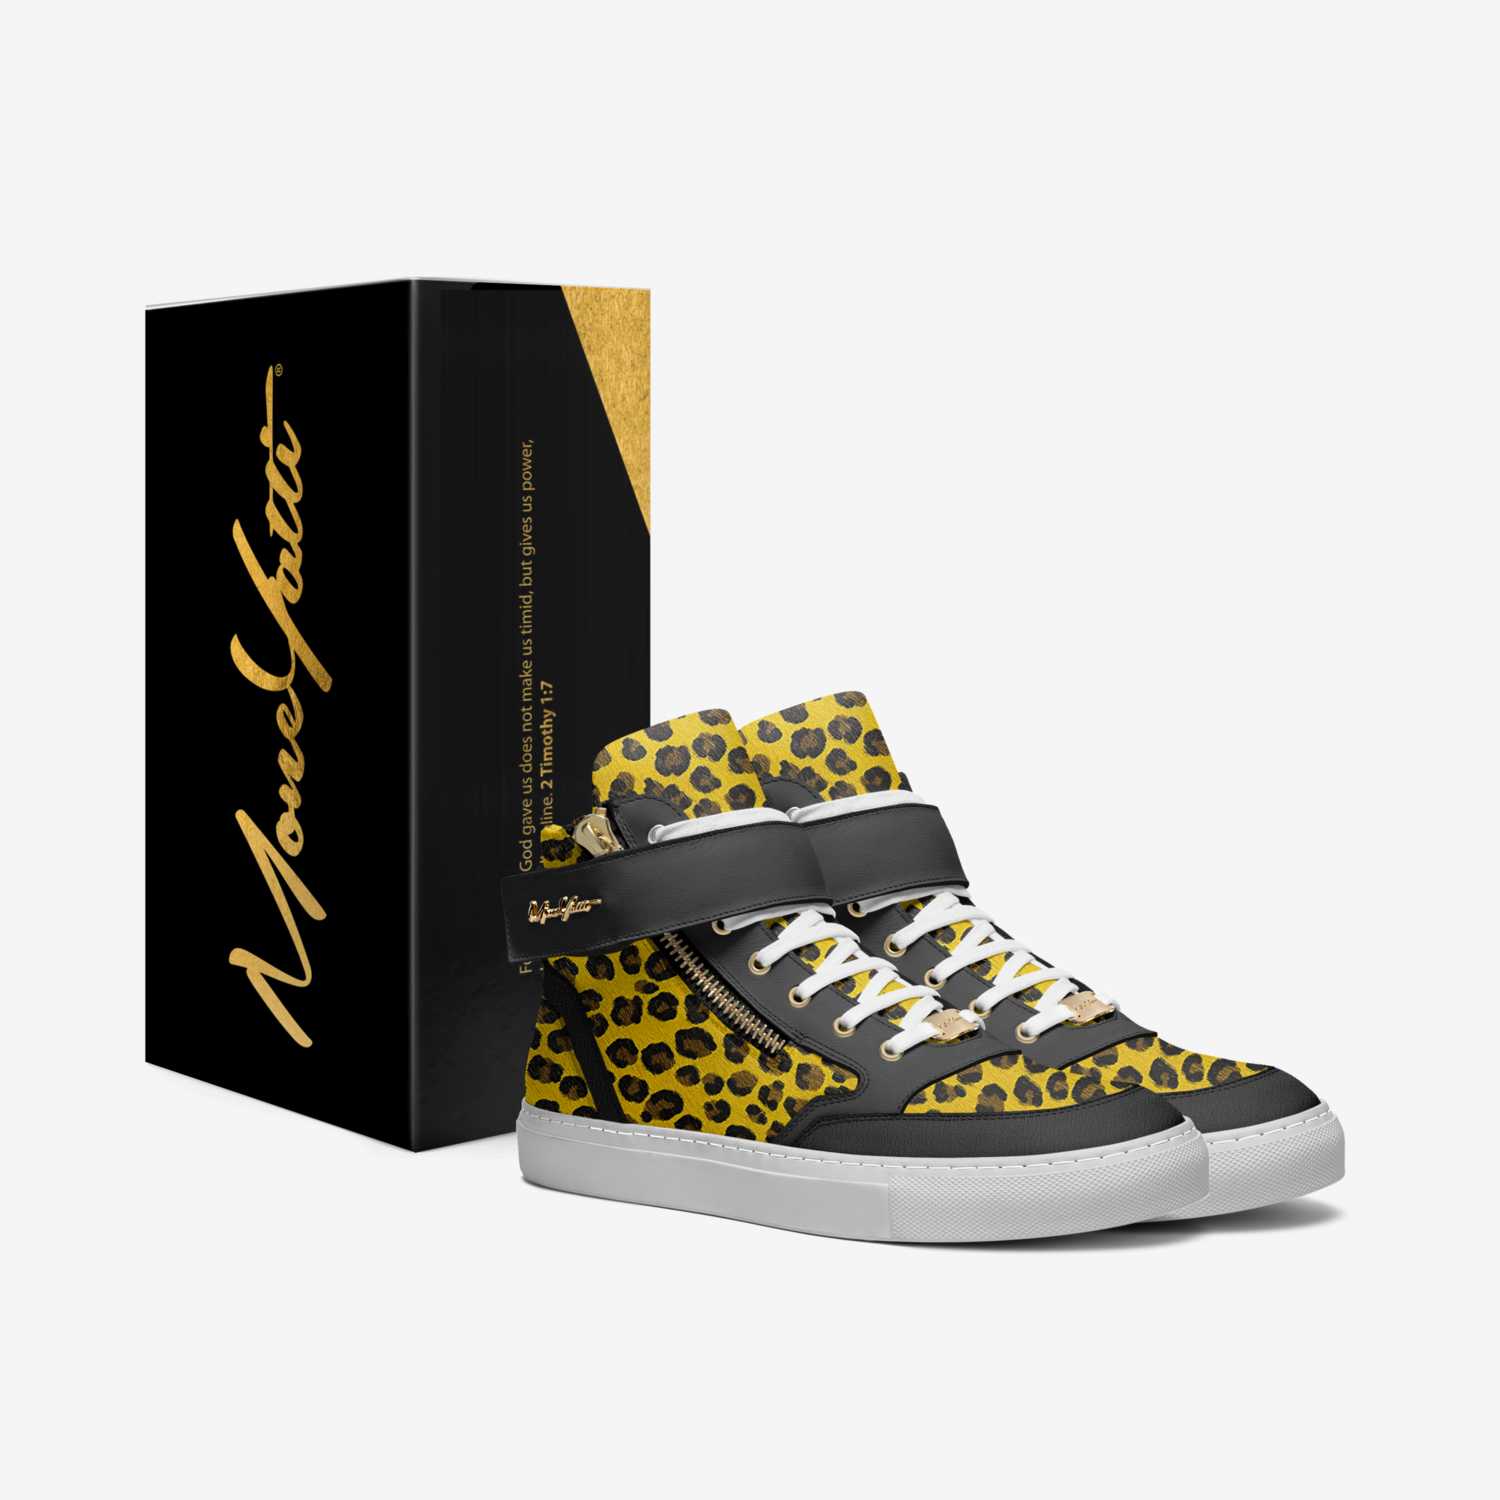 MONEYATTI CLS1W custom made in Italy shoes by Moneyatti Brand | Box view